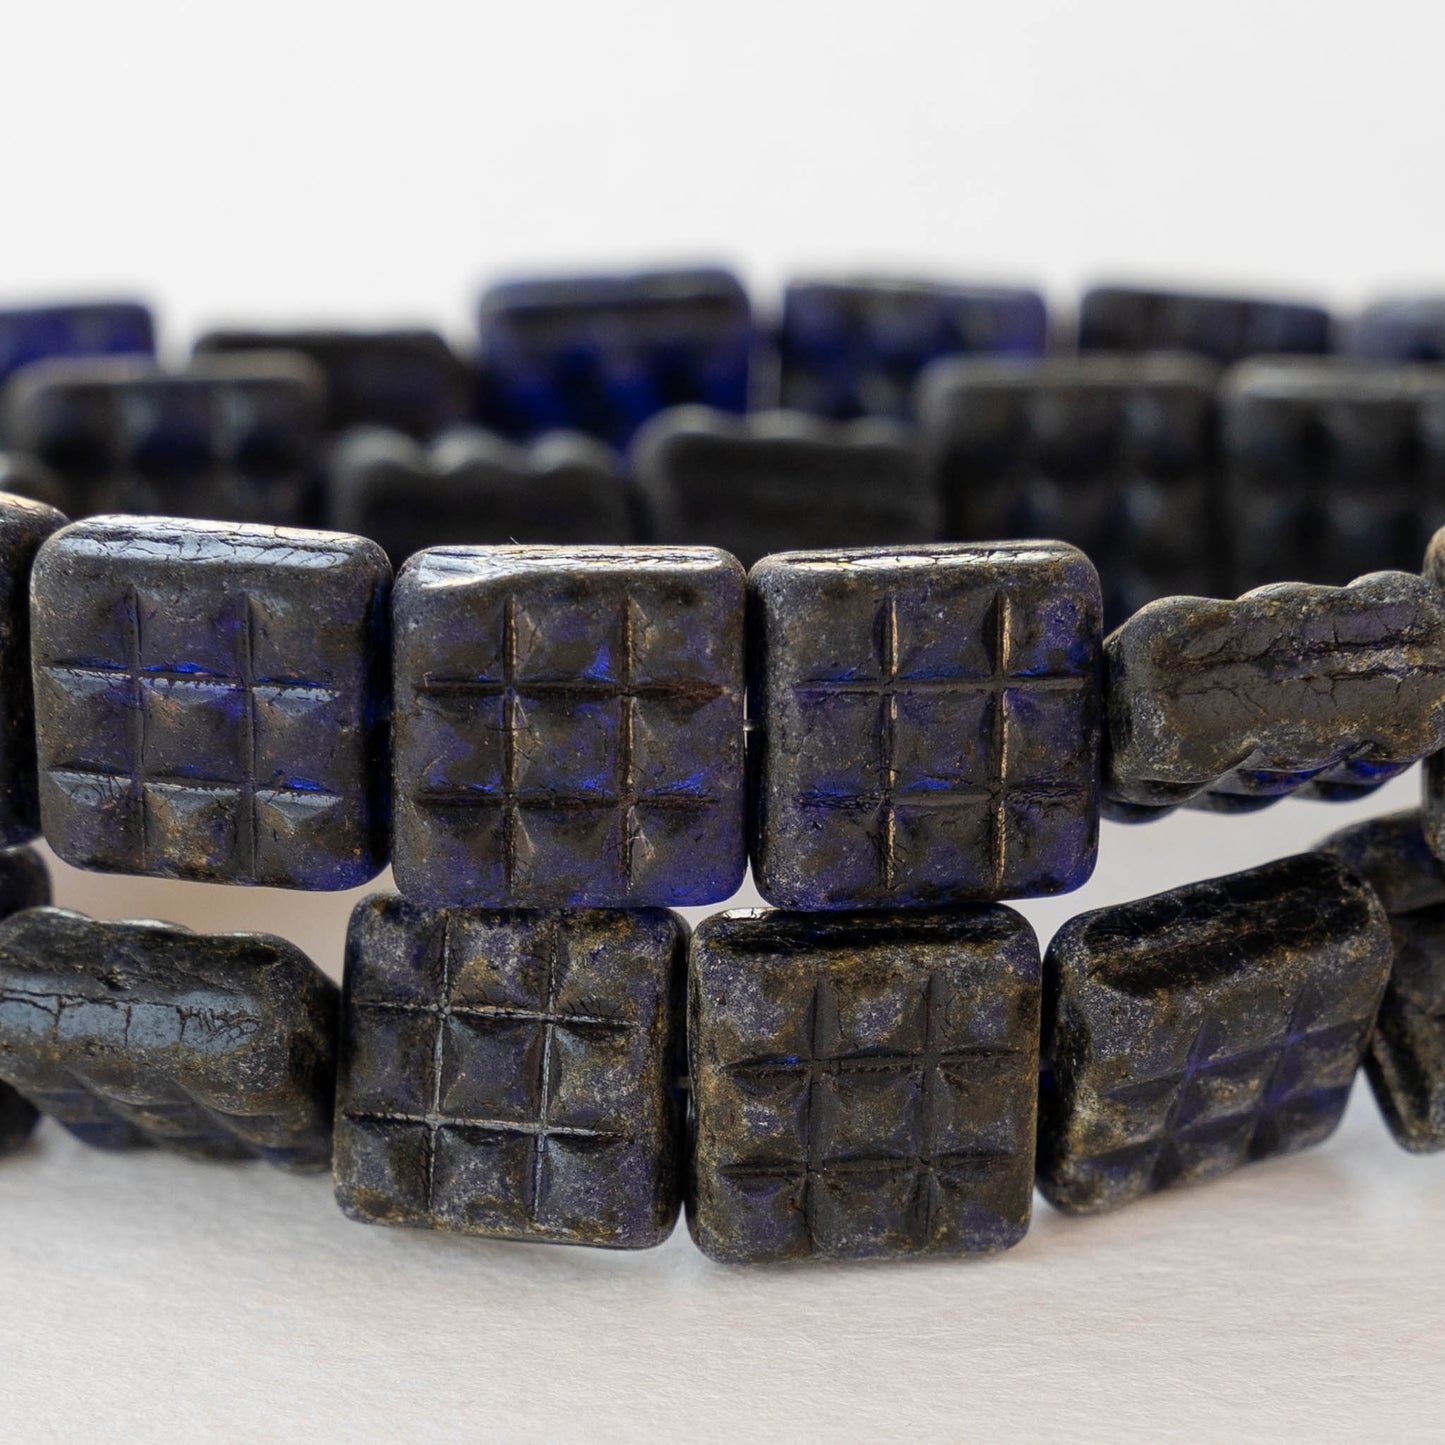 13mm Glass Tile Bead - Blue Black Matte - 10 beads